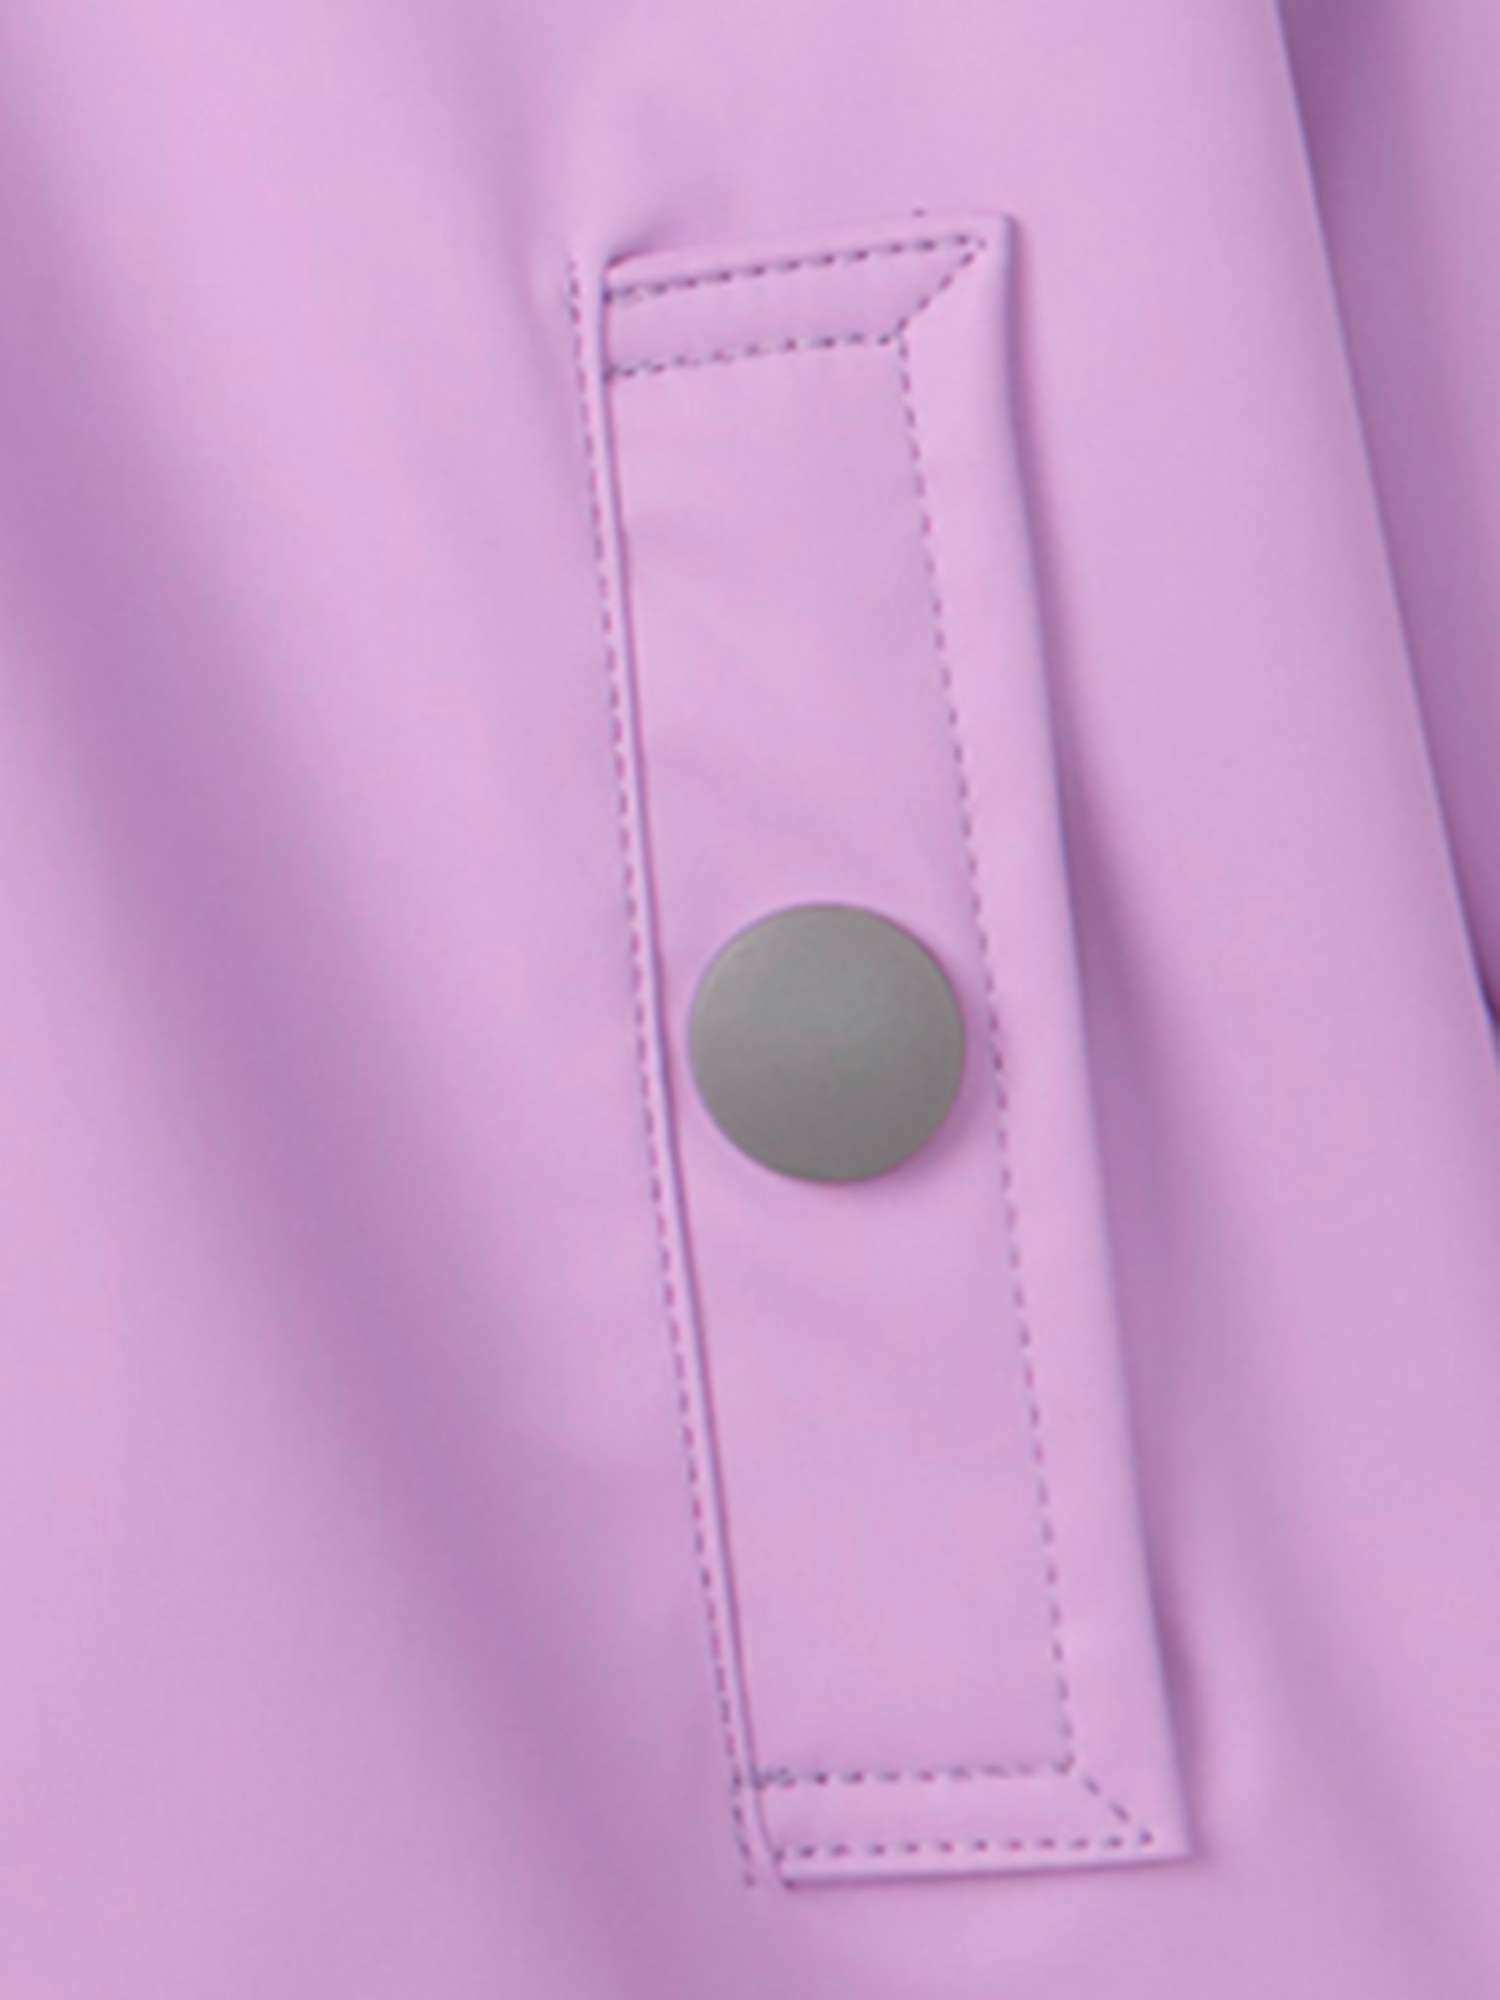 Buy Hatley Kids' Splash Hooded Jacket, Sheer Lilac Online at johnlewis.com